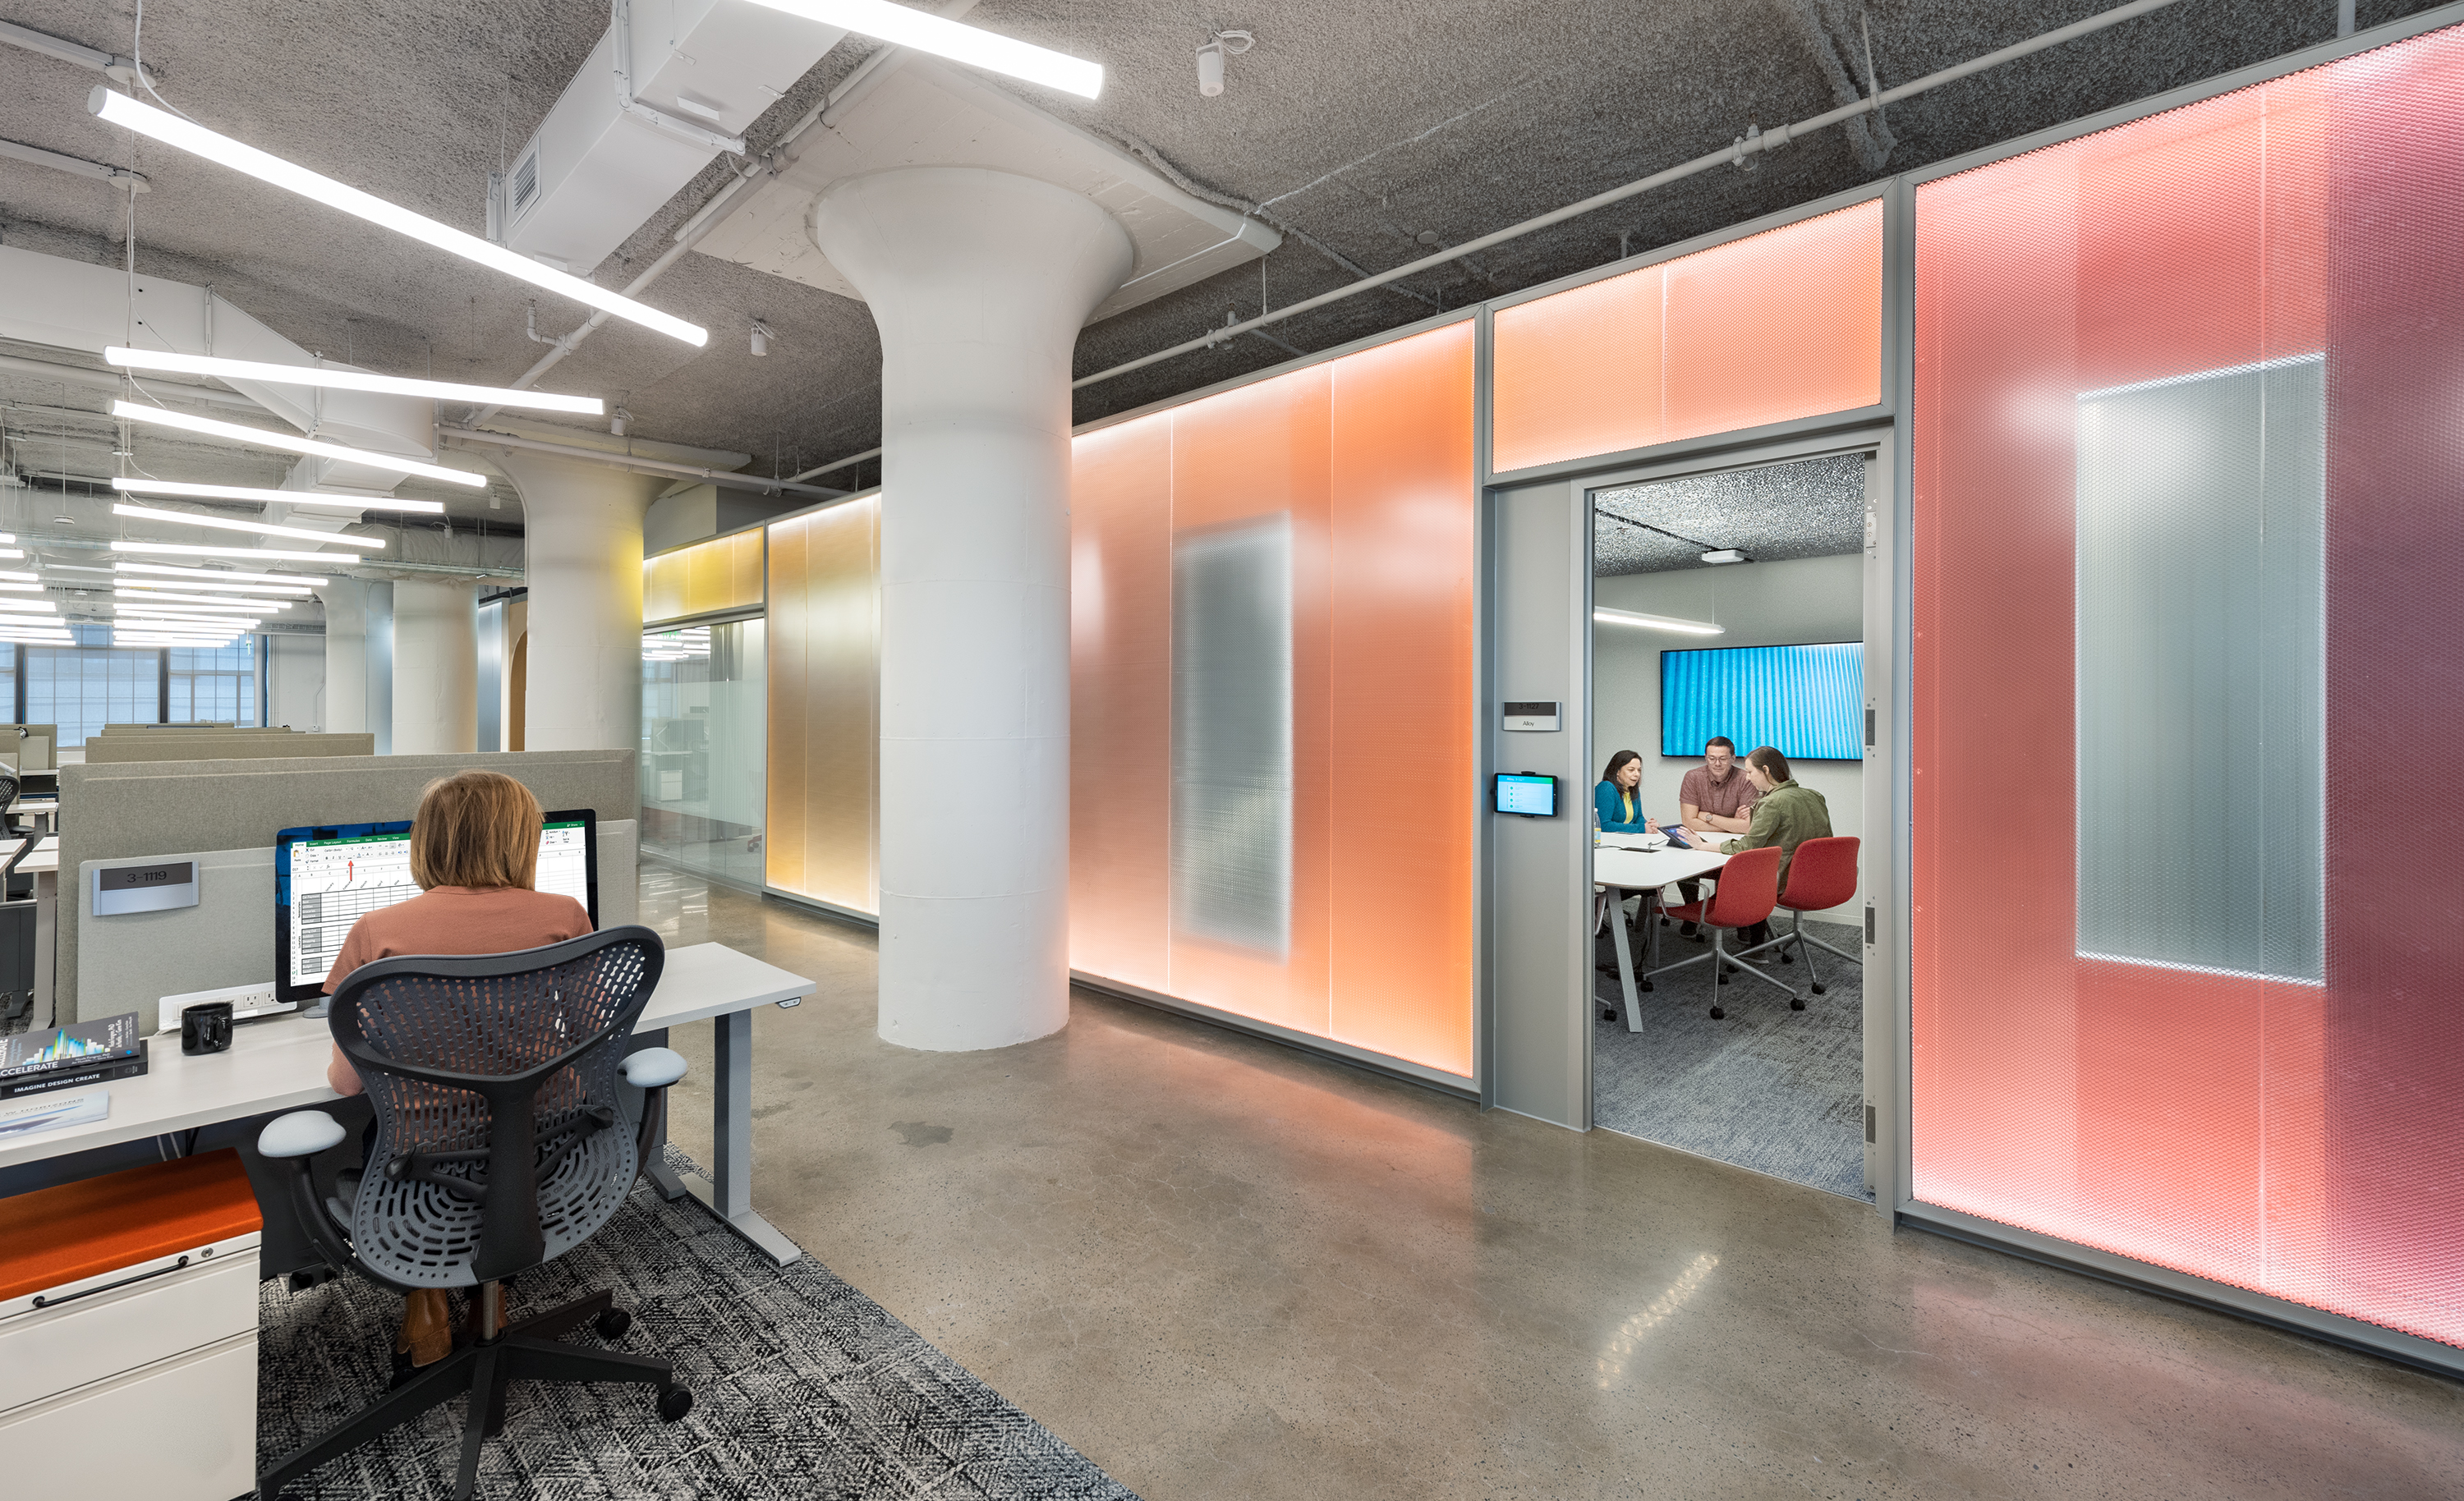 Autodesk Boston Workspace Expansion is an Architizer A+ Awards finalist – please vote!